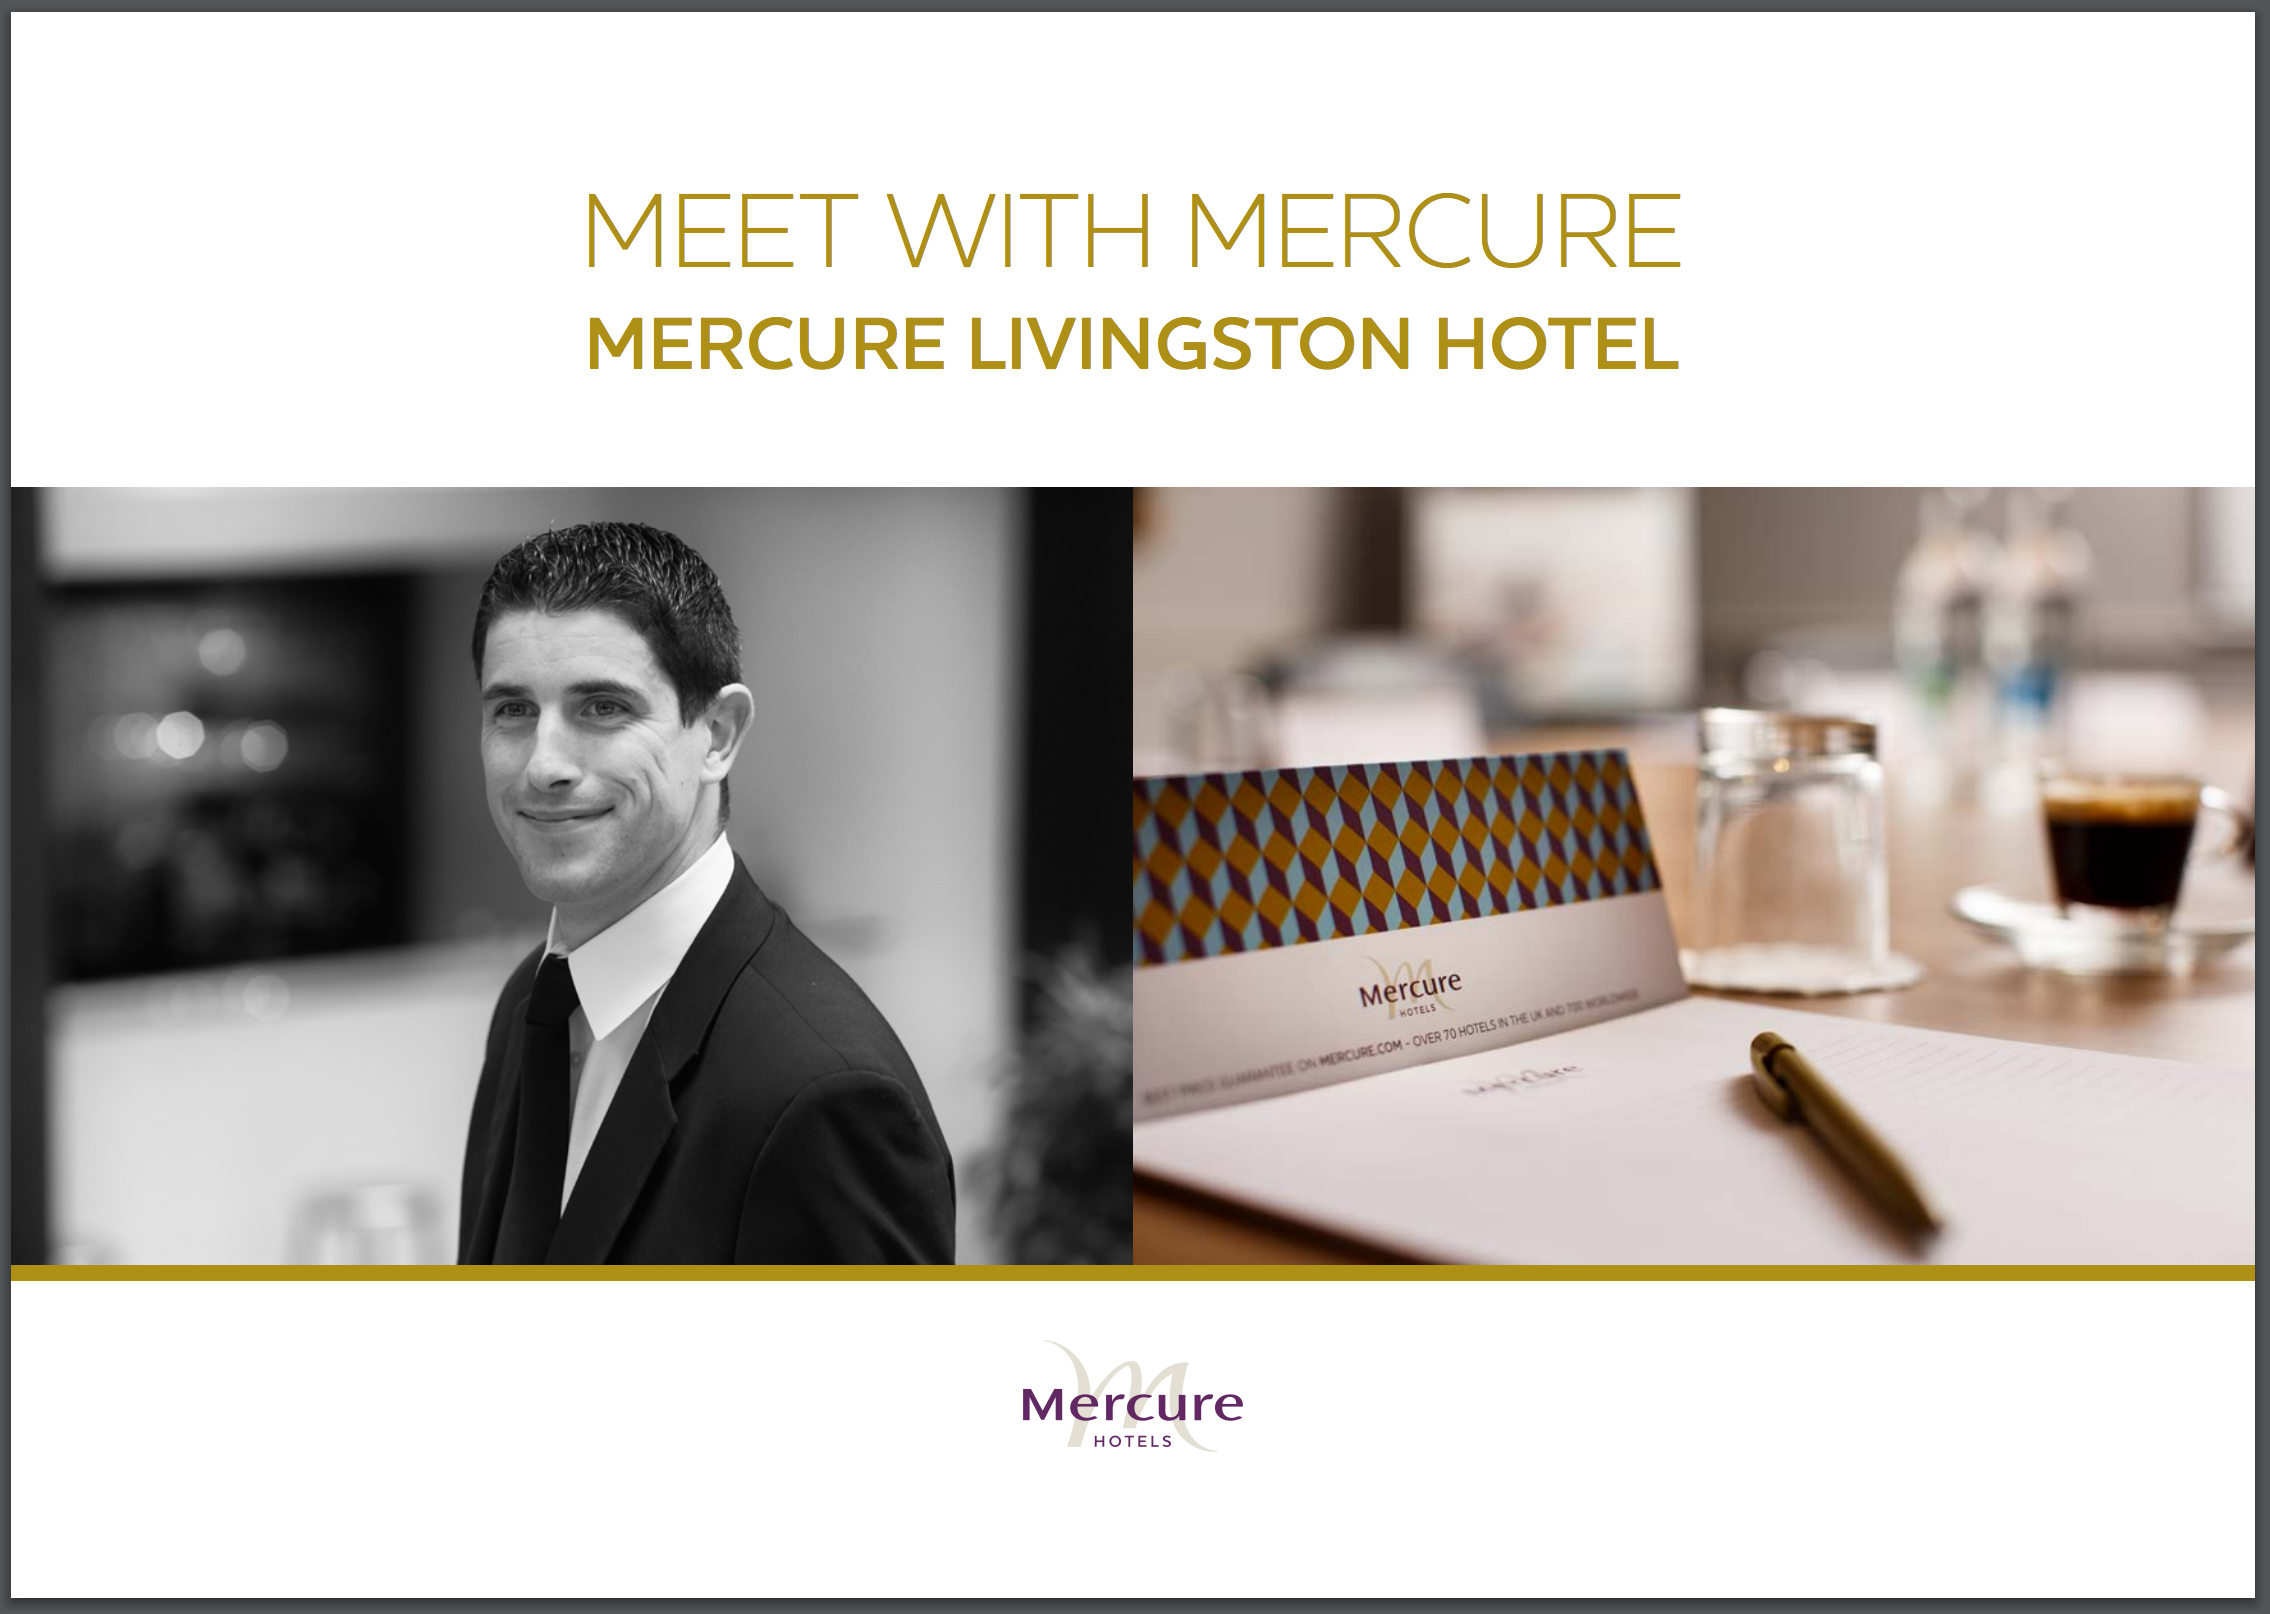 Mercure Livingston Hotel – Meetings Brochure Cover